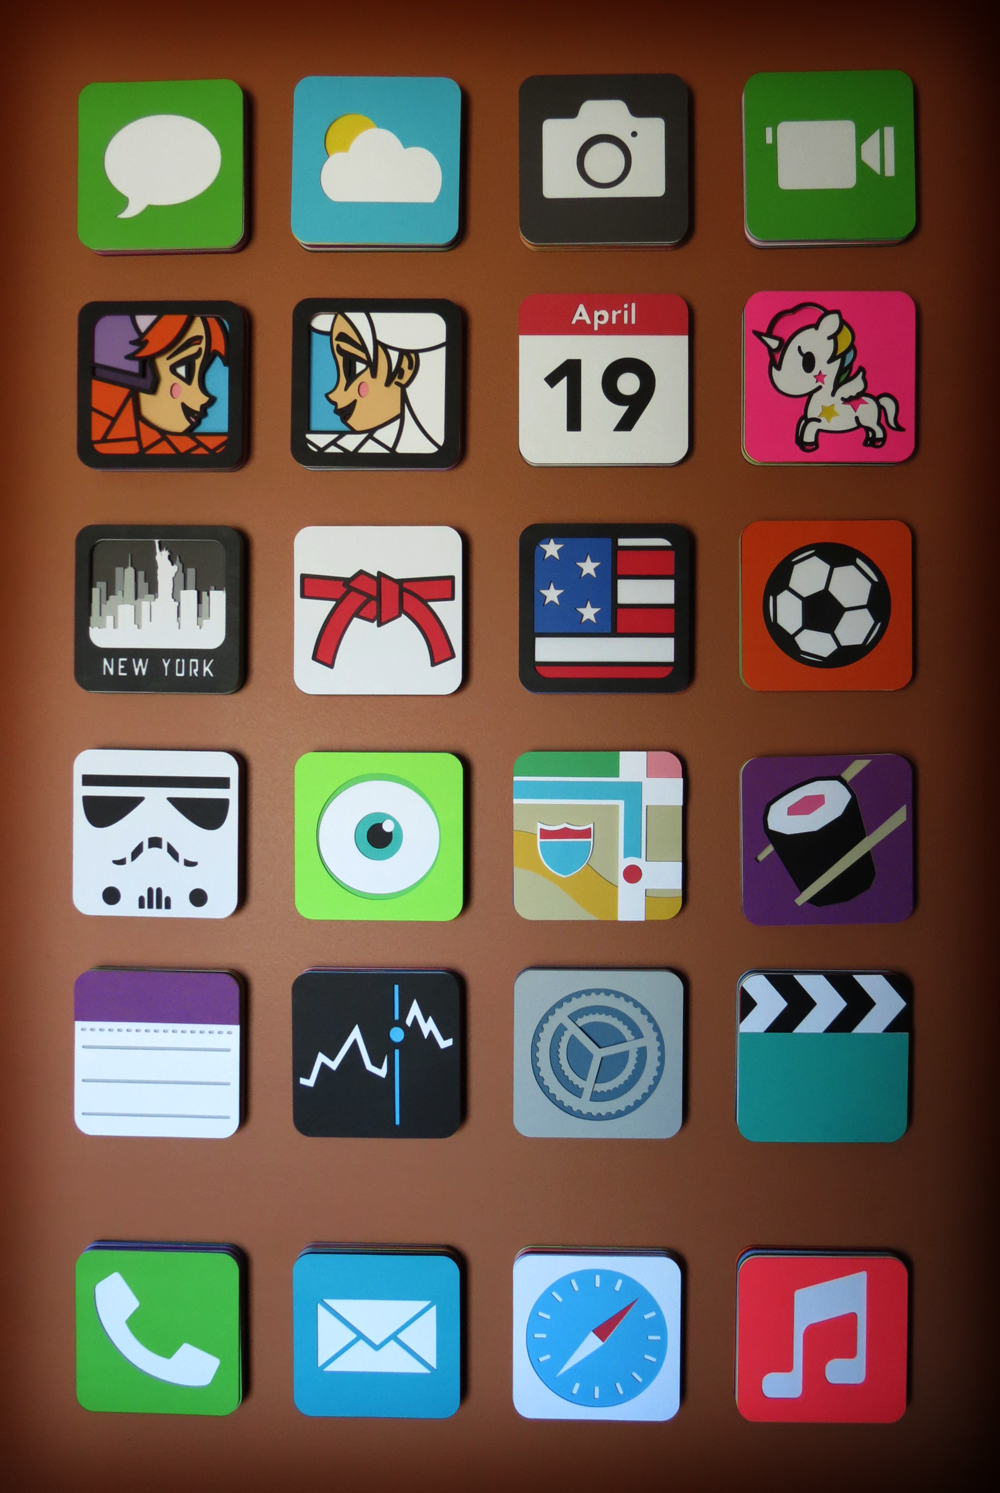 ios wall apps applications favorites iphone iPad ipod